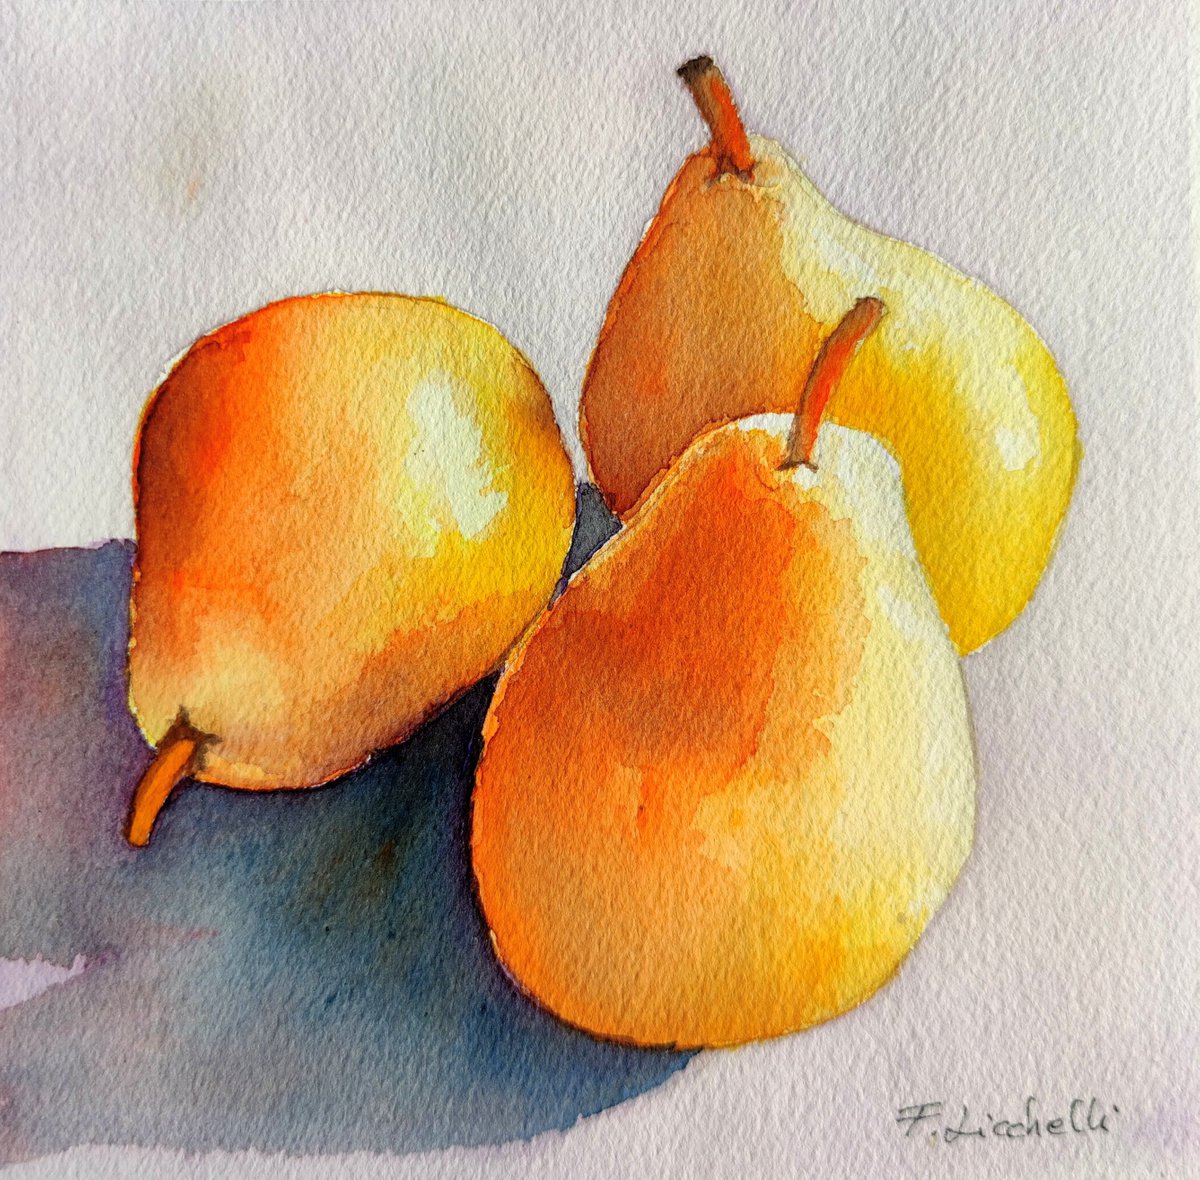 Pears by Francesca Licchelli